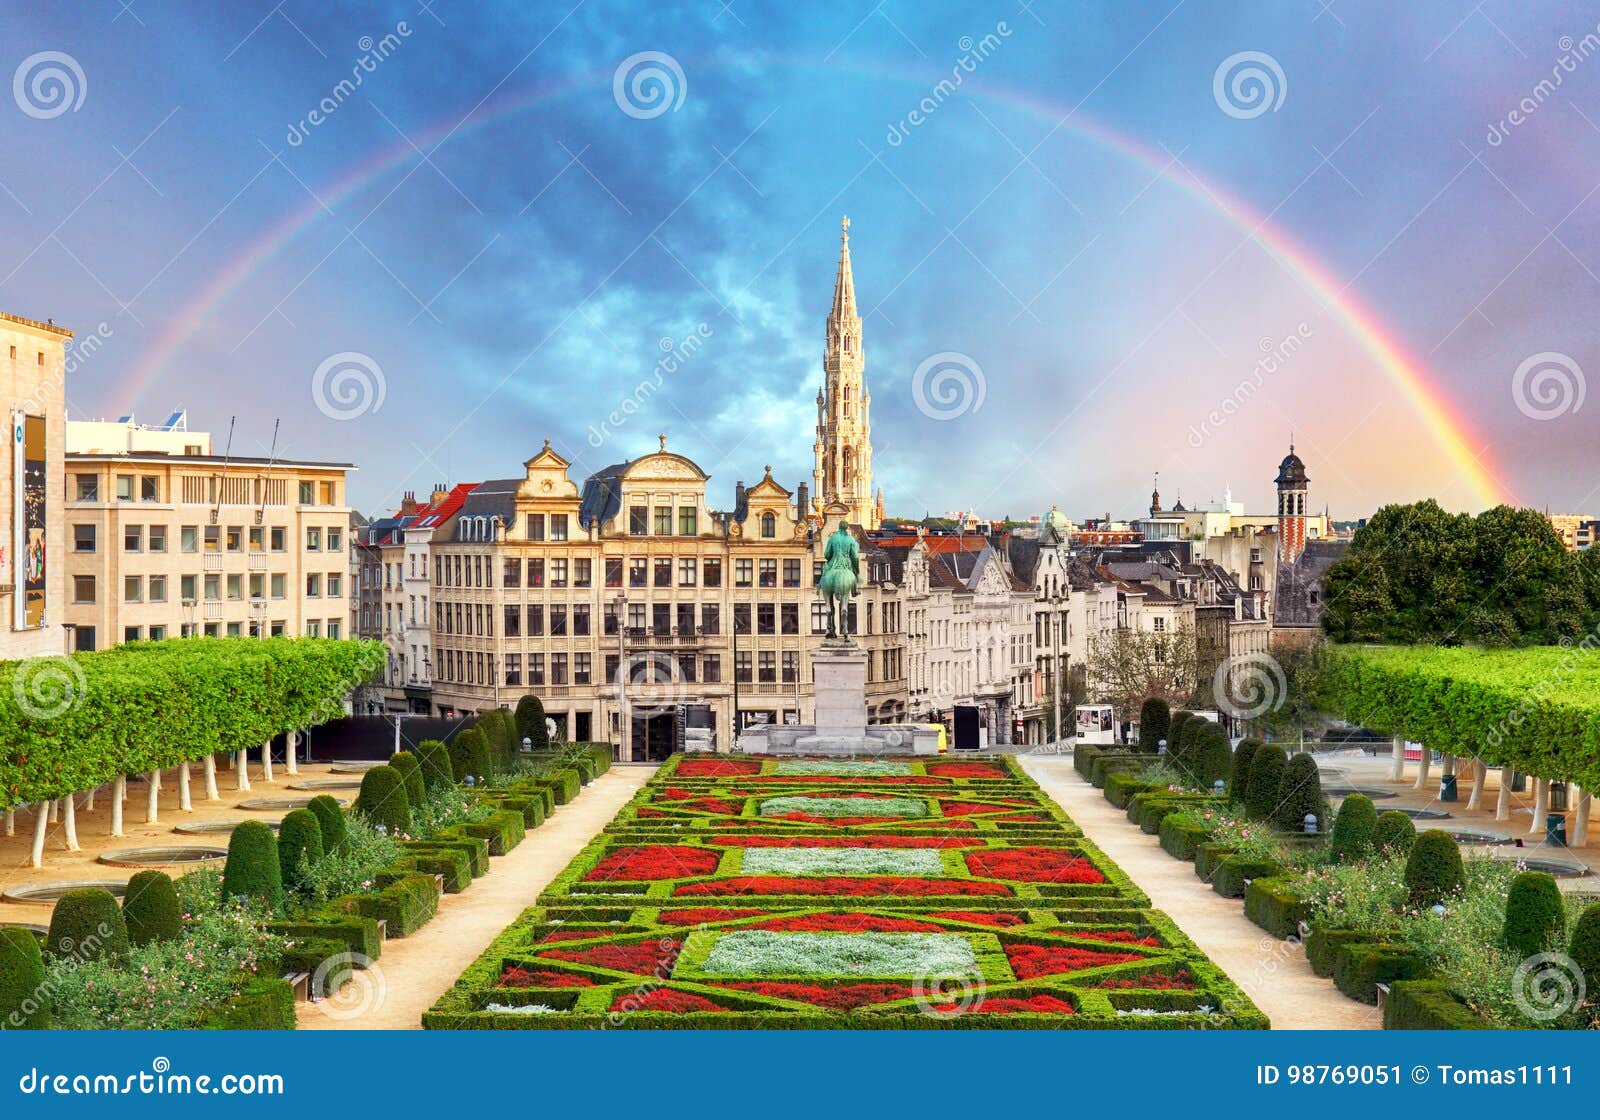 cityscape of brussels with rainbow, belgium panorama skyline